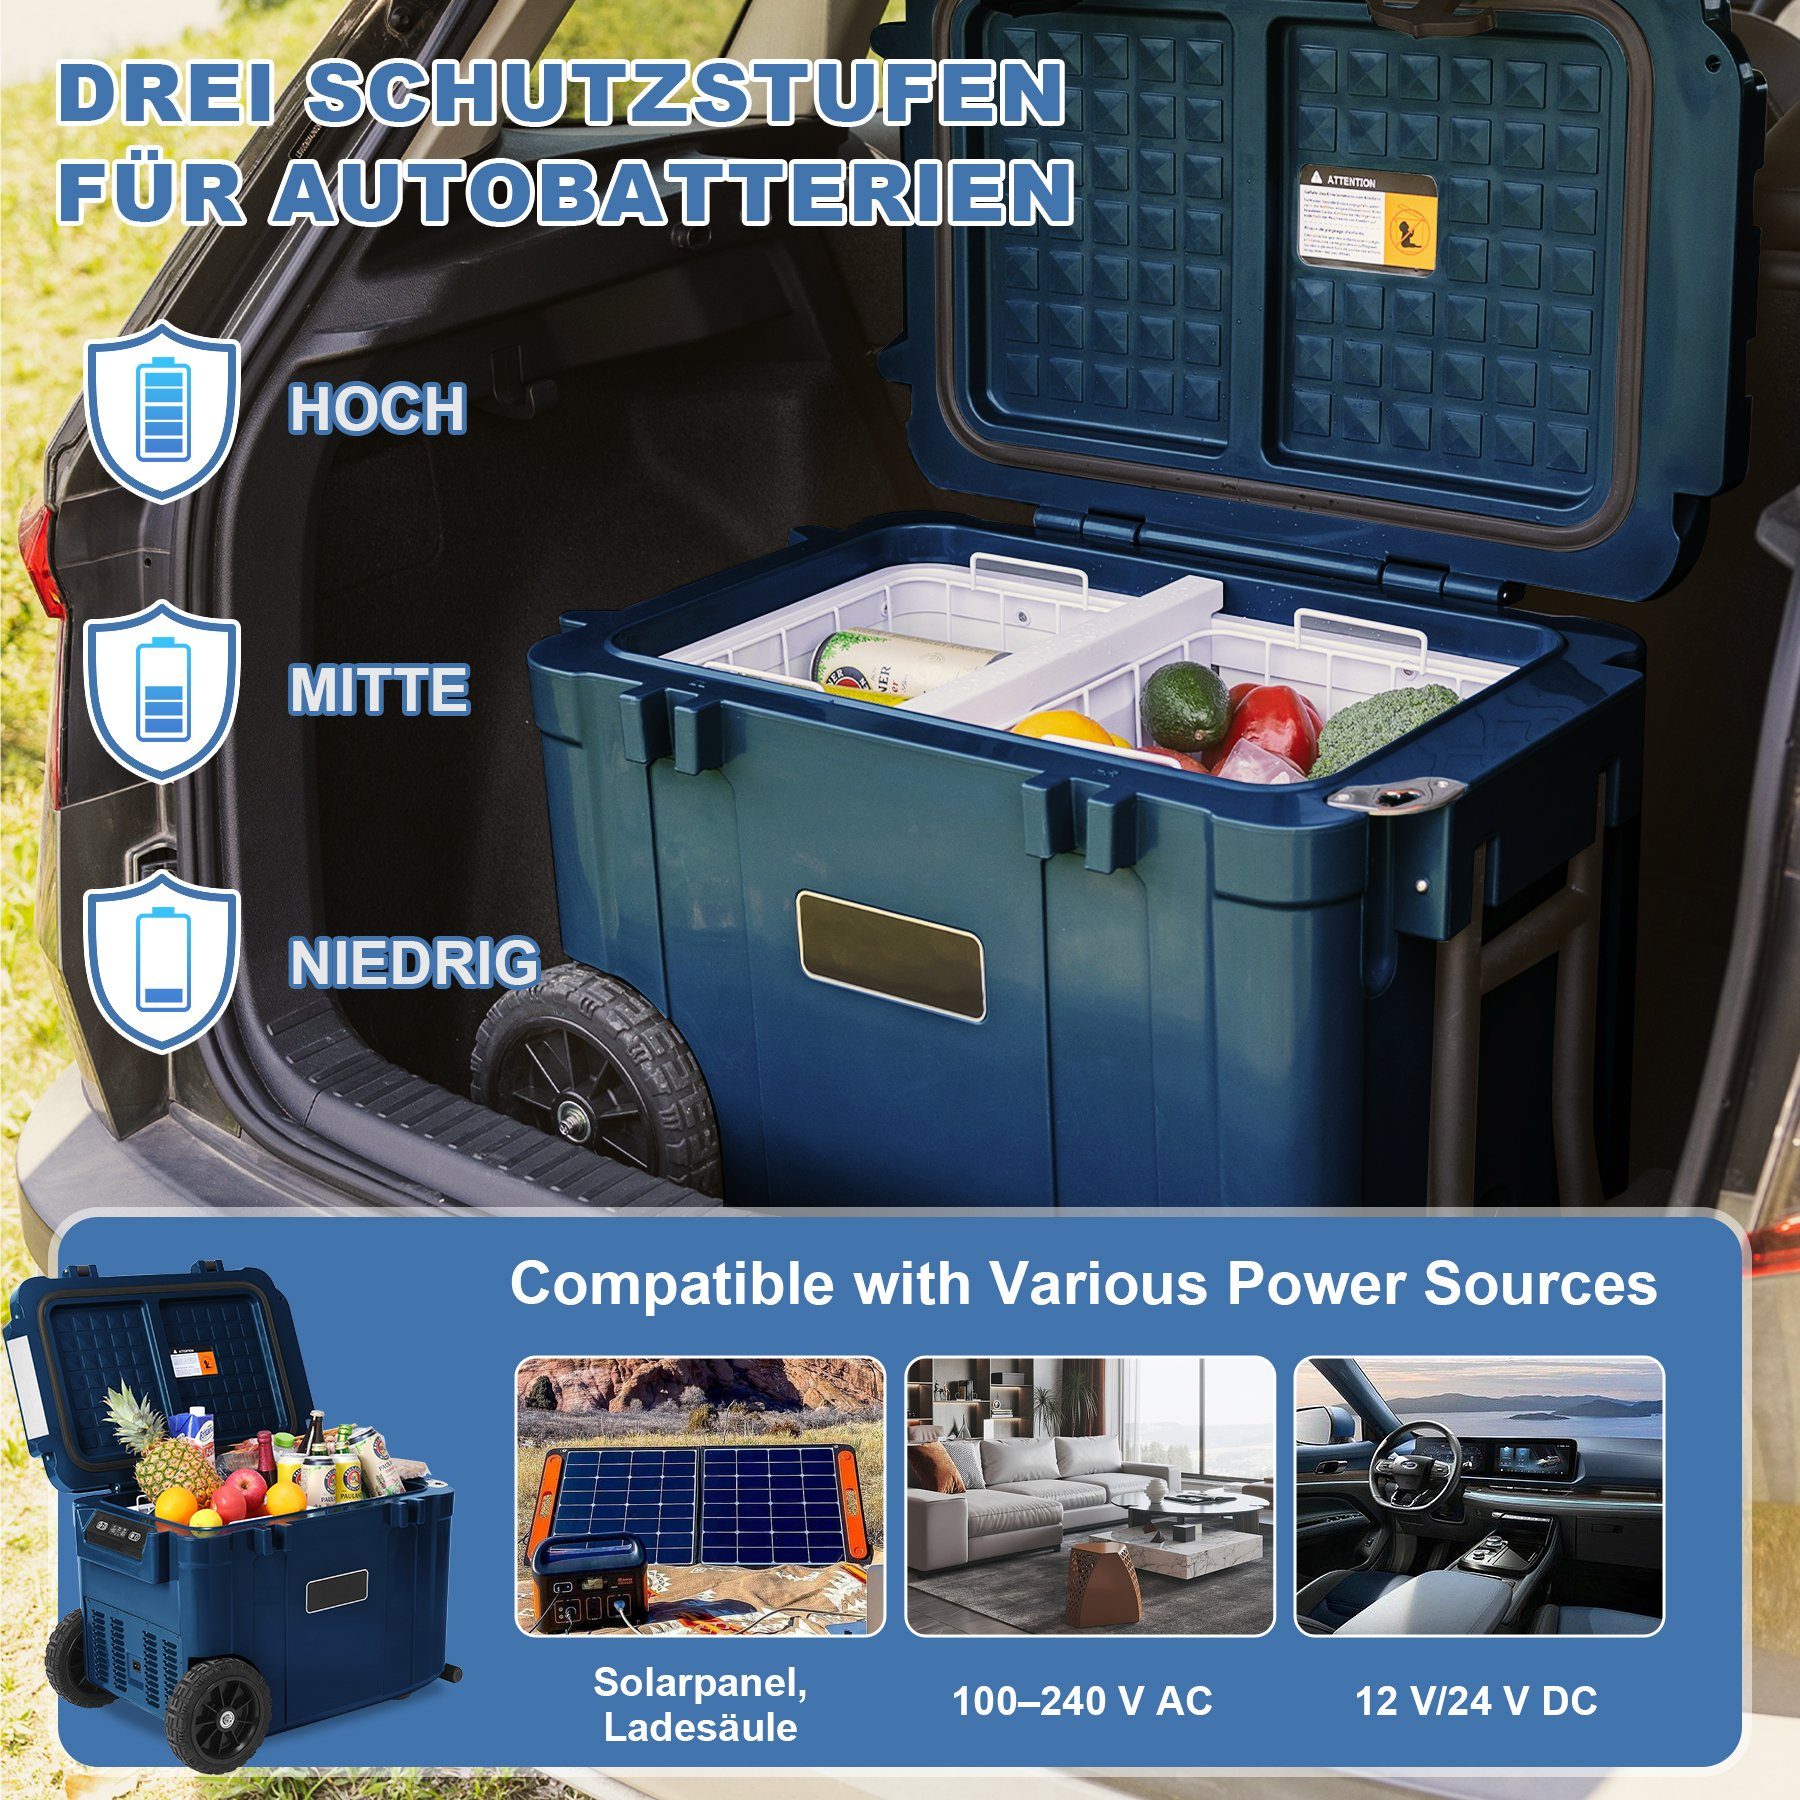 Kühlbox 45L l HomeMiYN Temperaturregelung, Auto doppelte kompressor Kühlbox 30 Kühlschrank Blau